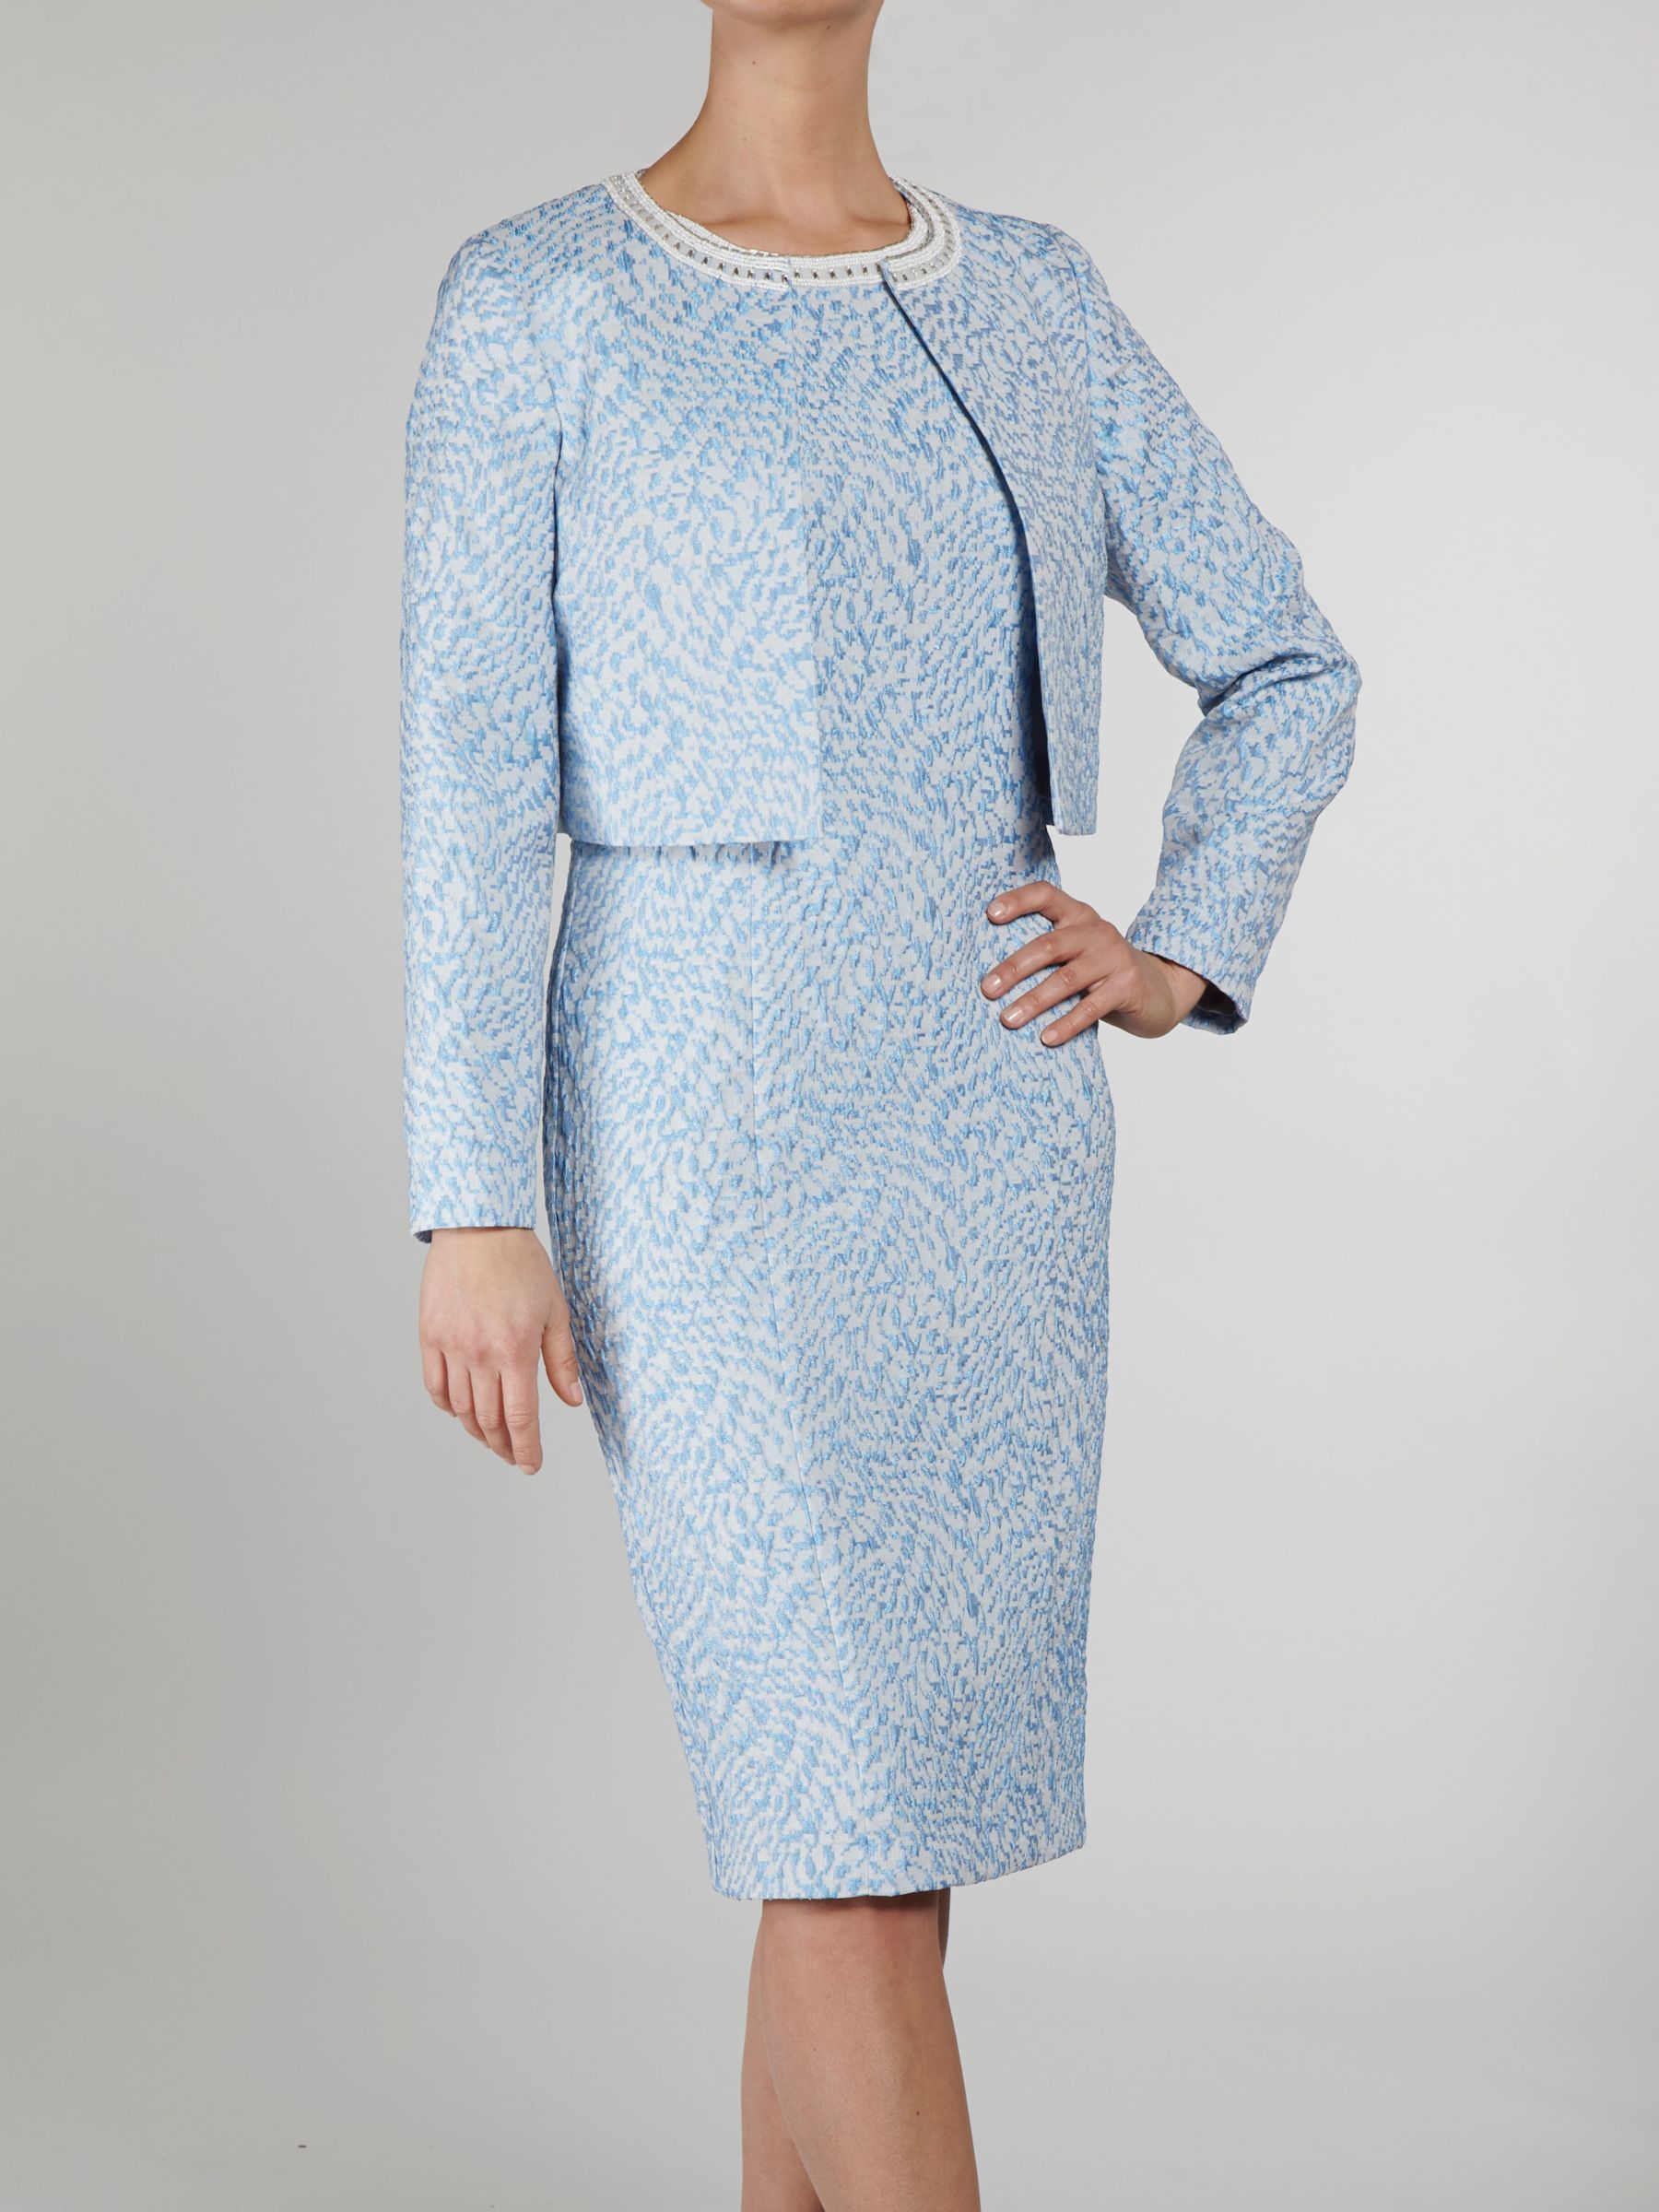 Gina Bacconi Jacquard Dress, Blue at John Lewis & Partners